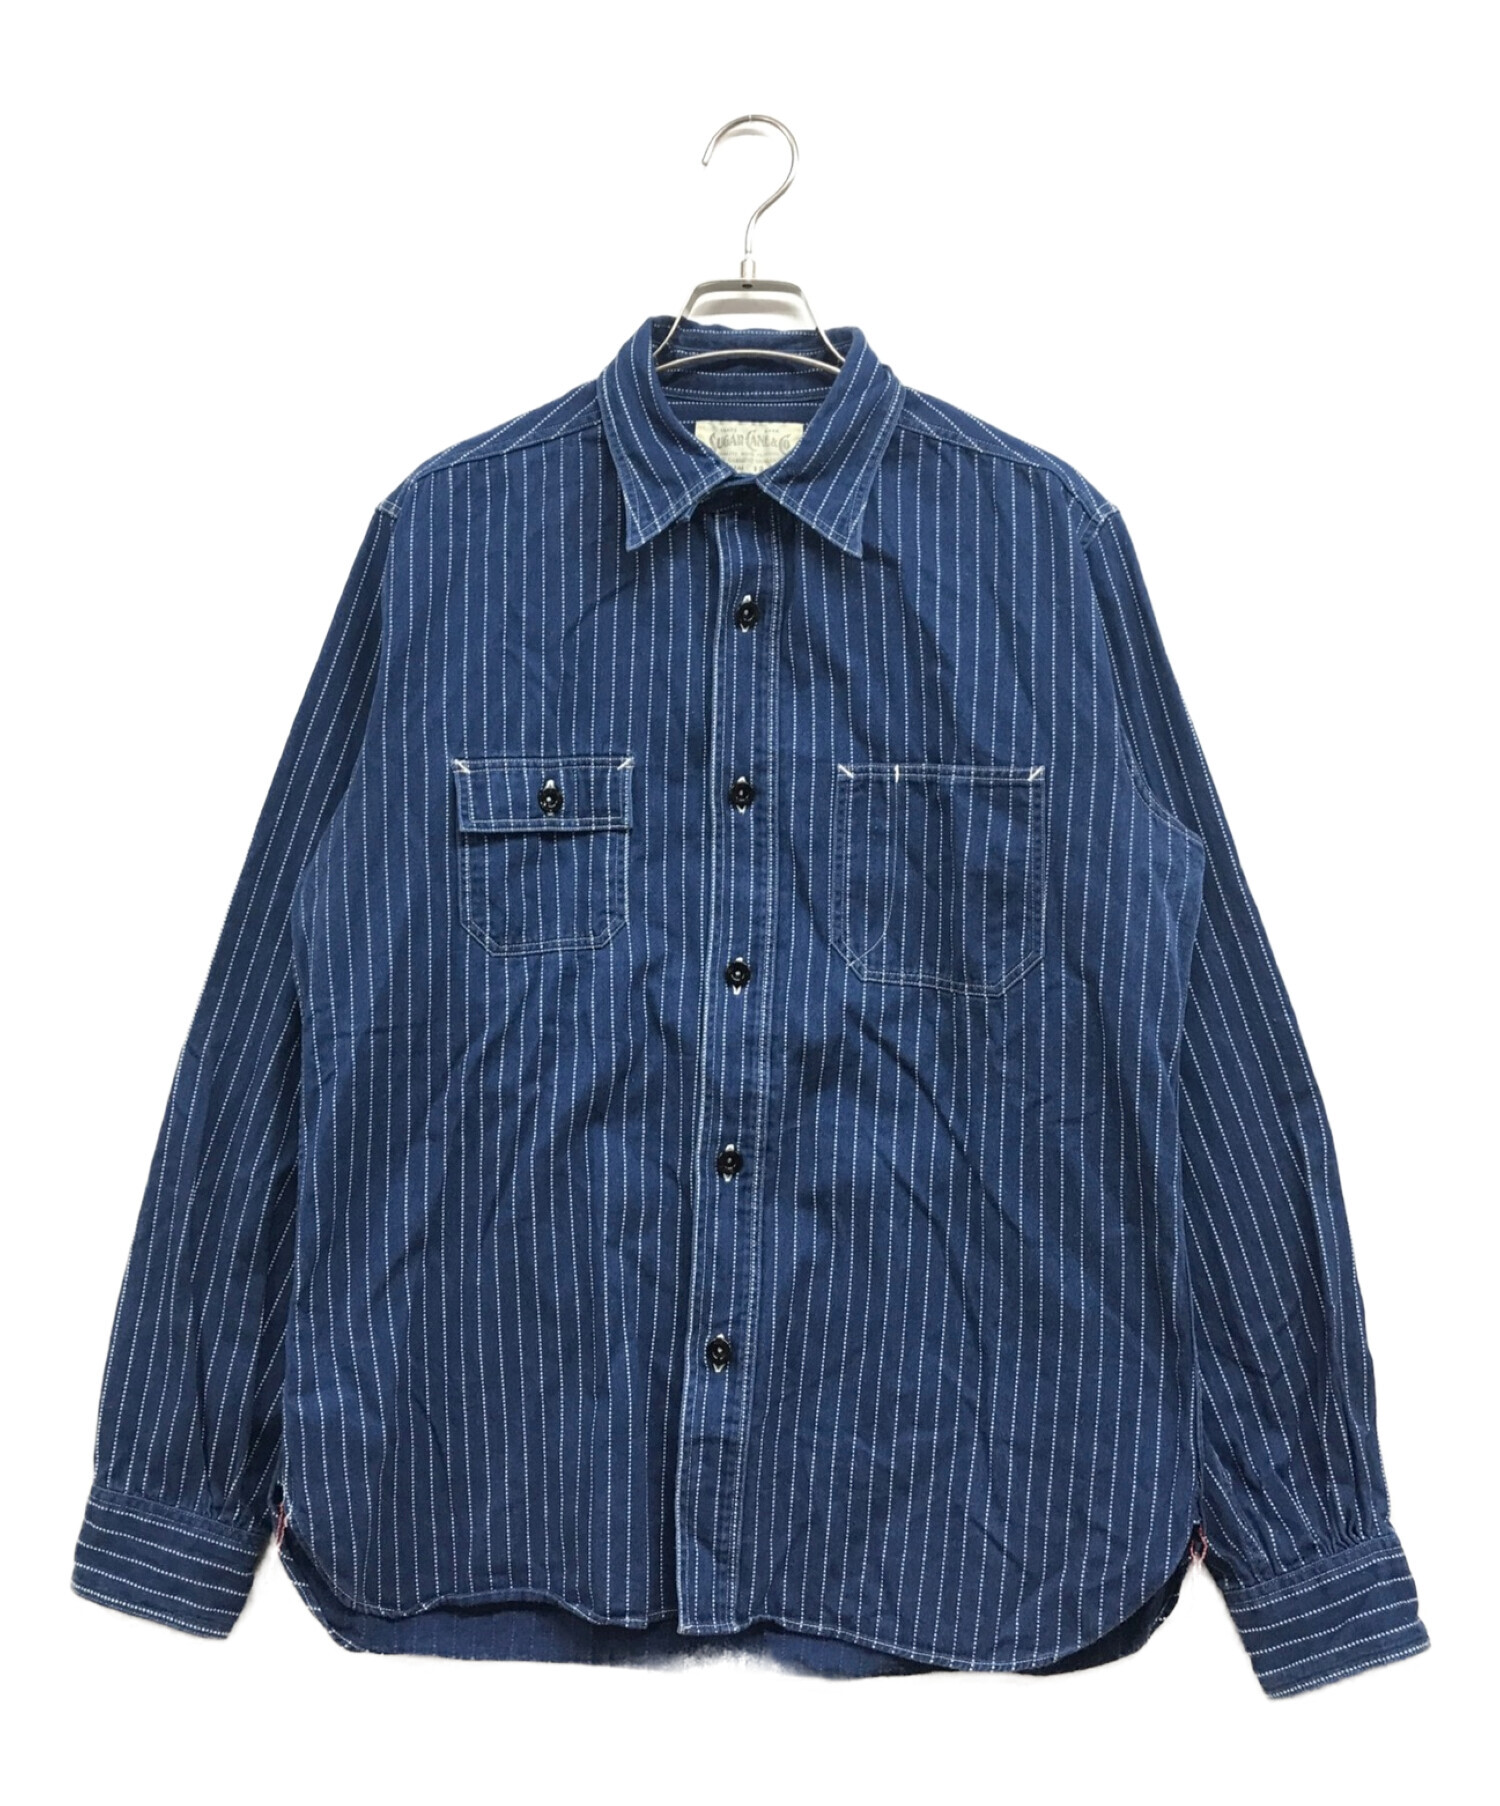 SUGAR CANE (シュガーケーン) ウォバッシュストライプワークシャツ ブルー サイズ:Ⅿ